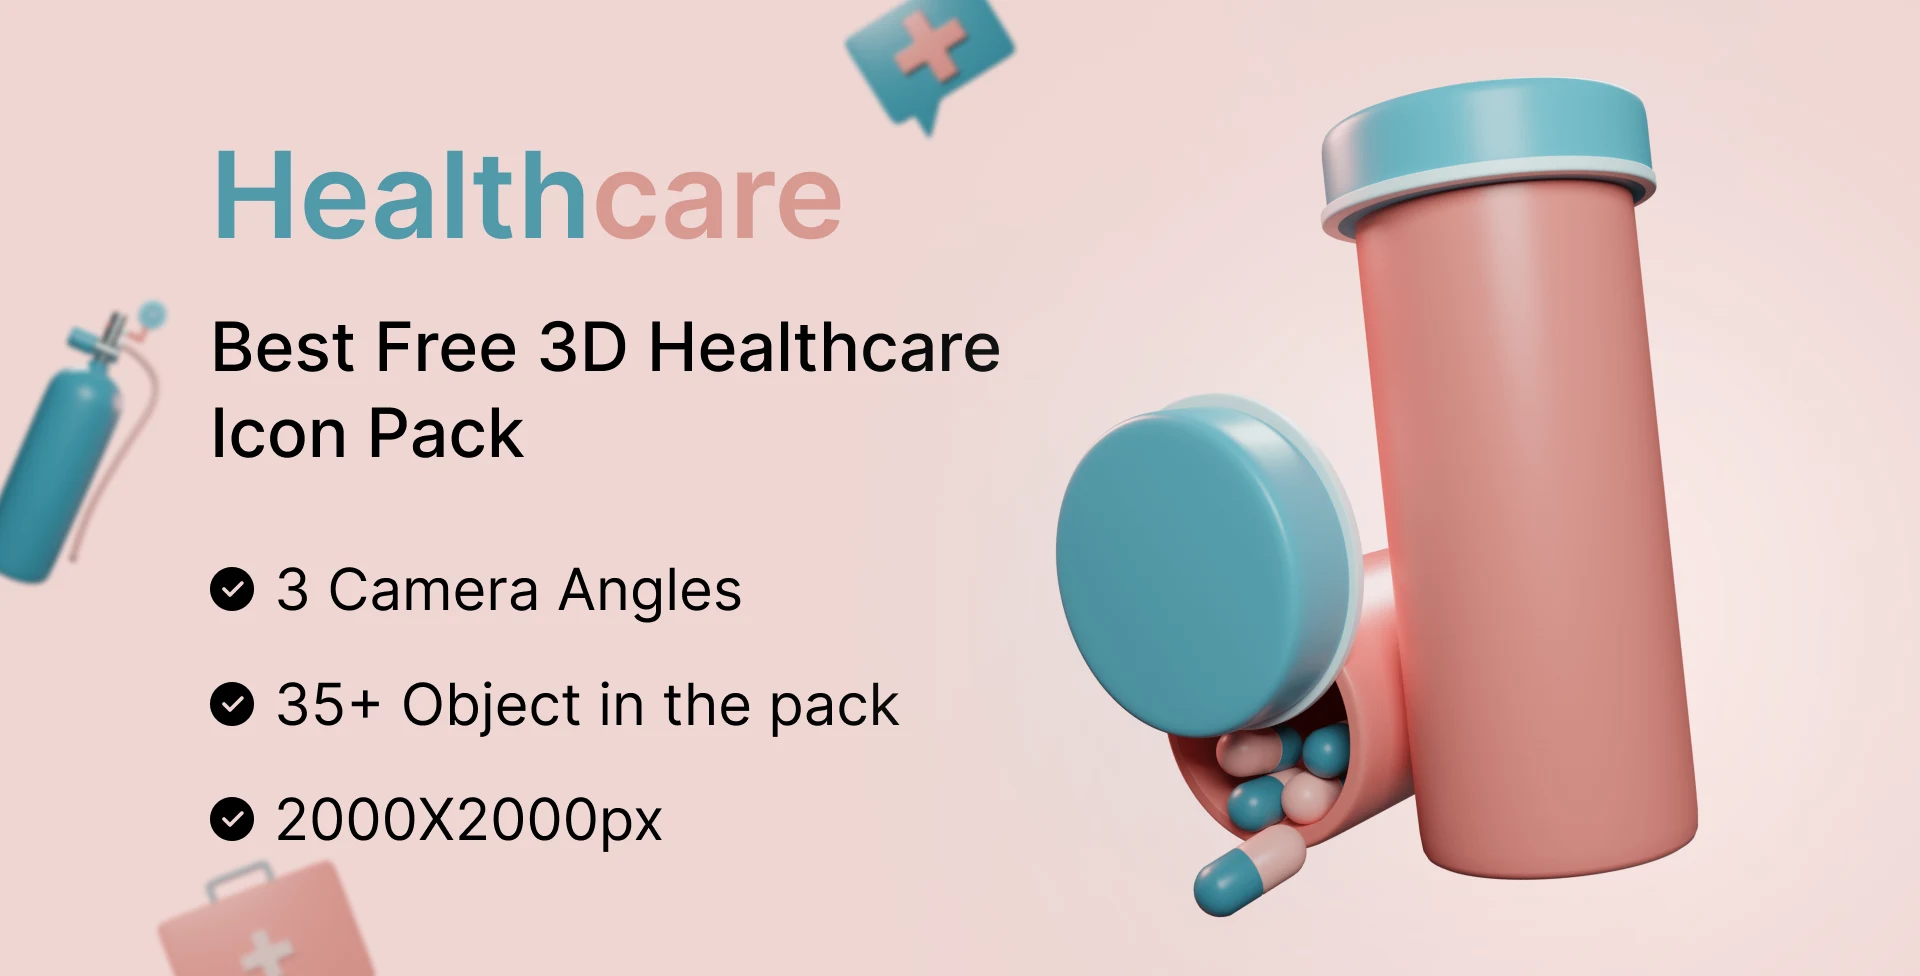 Best Free 3D Healthcare Icon Pack | Healthcare | Iqonic Design